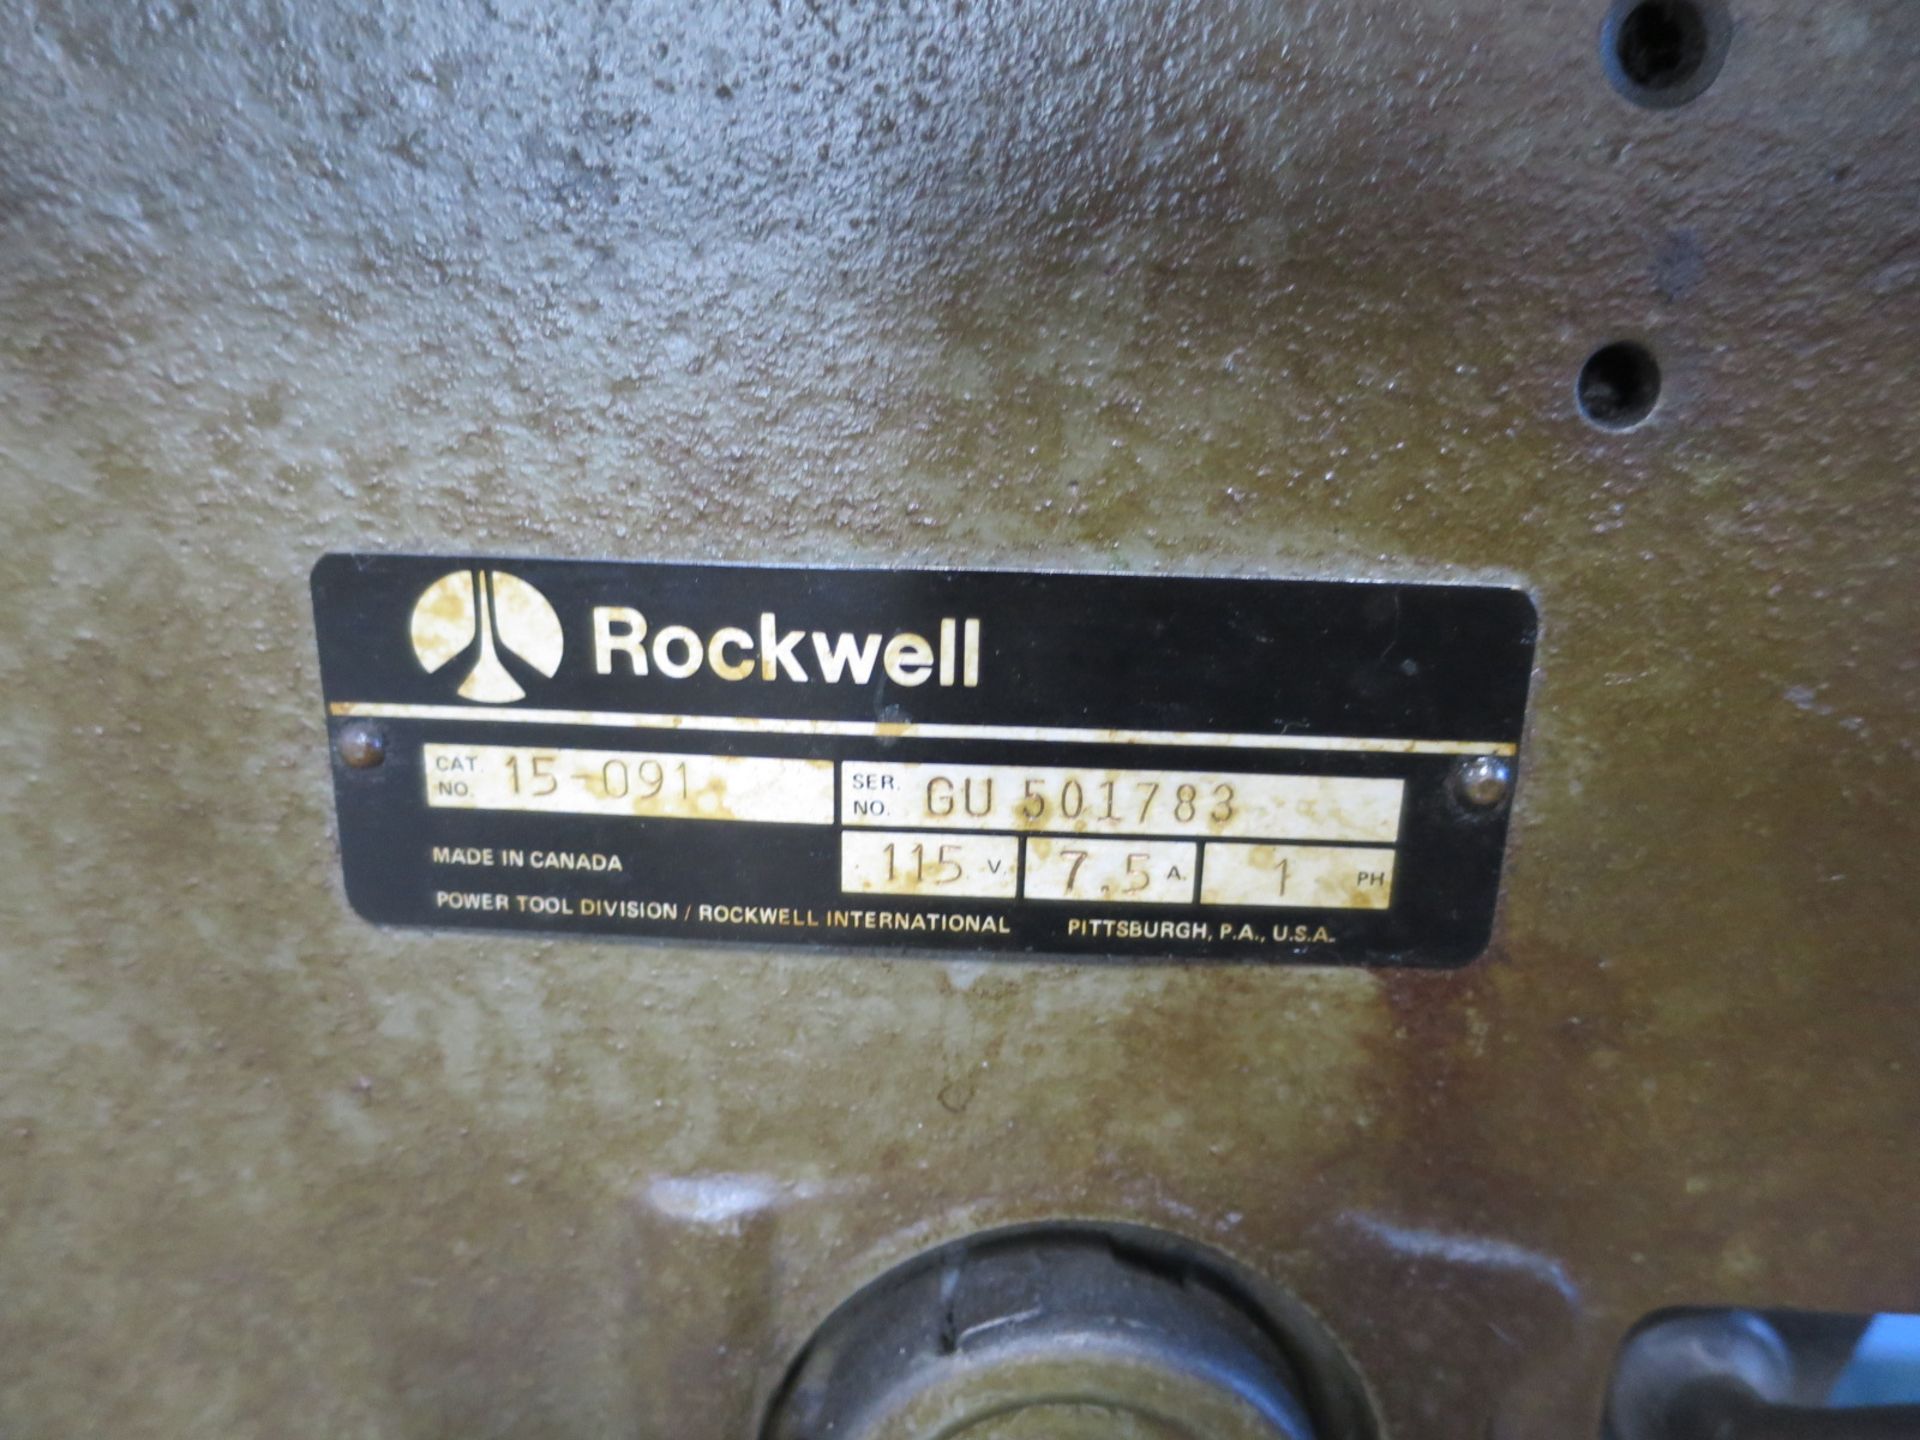 Rockwell Model 15-091 Drill Press, SN GU501783 - Image 2 of 2